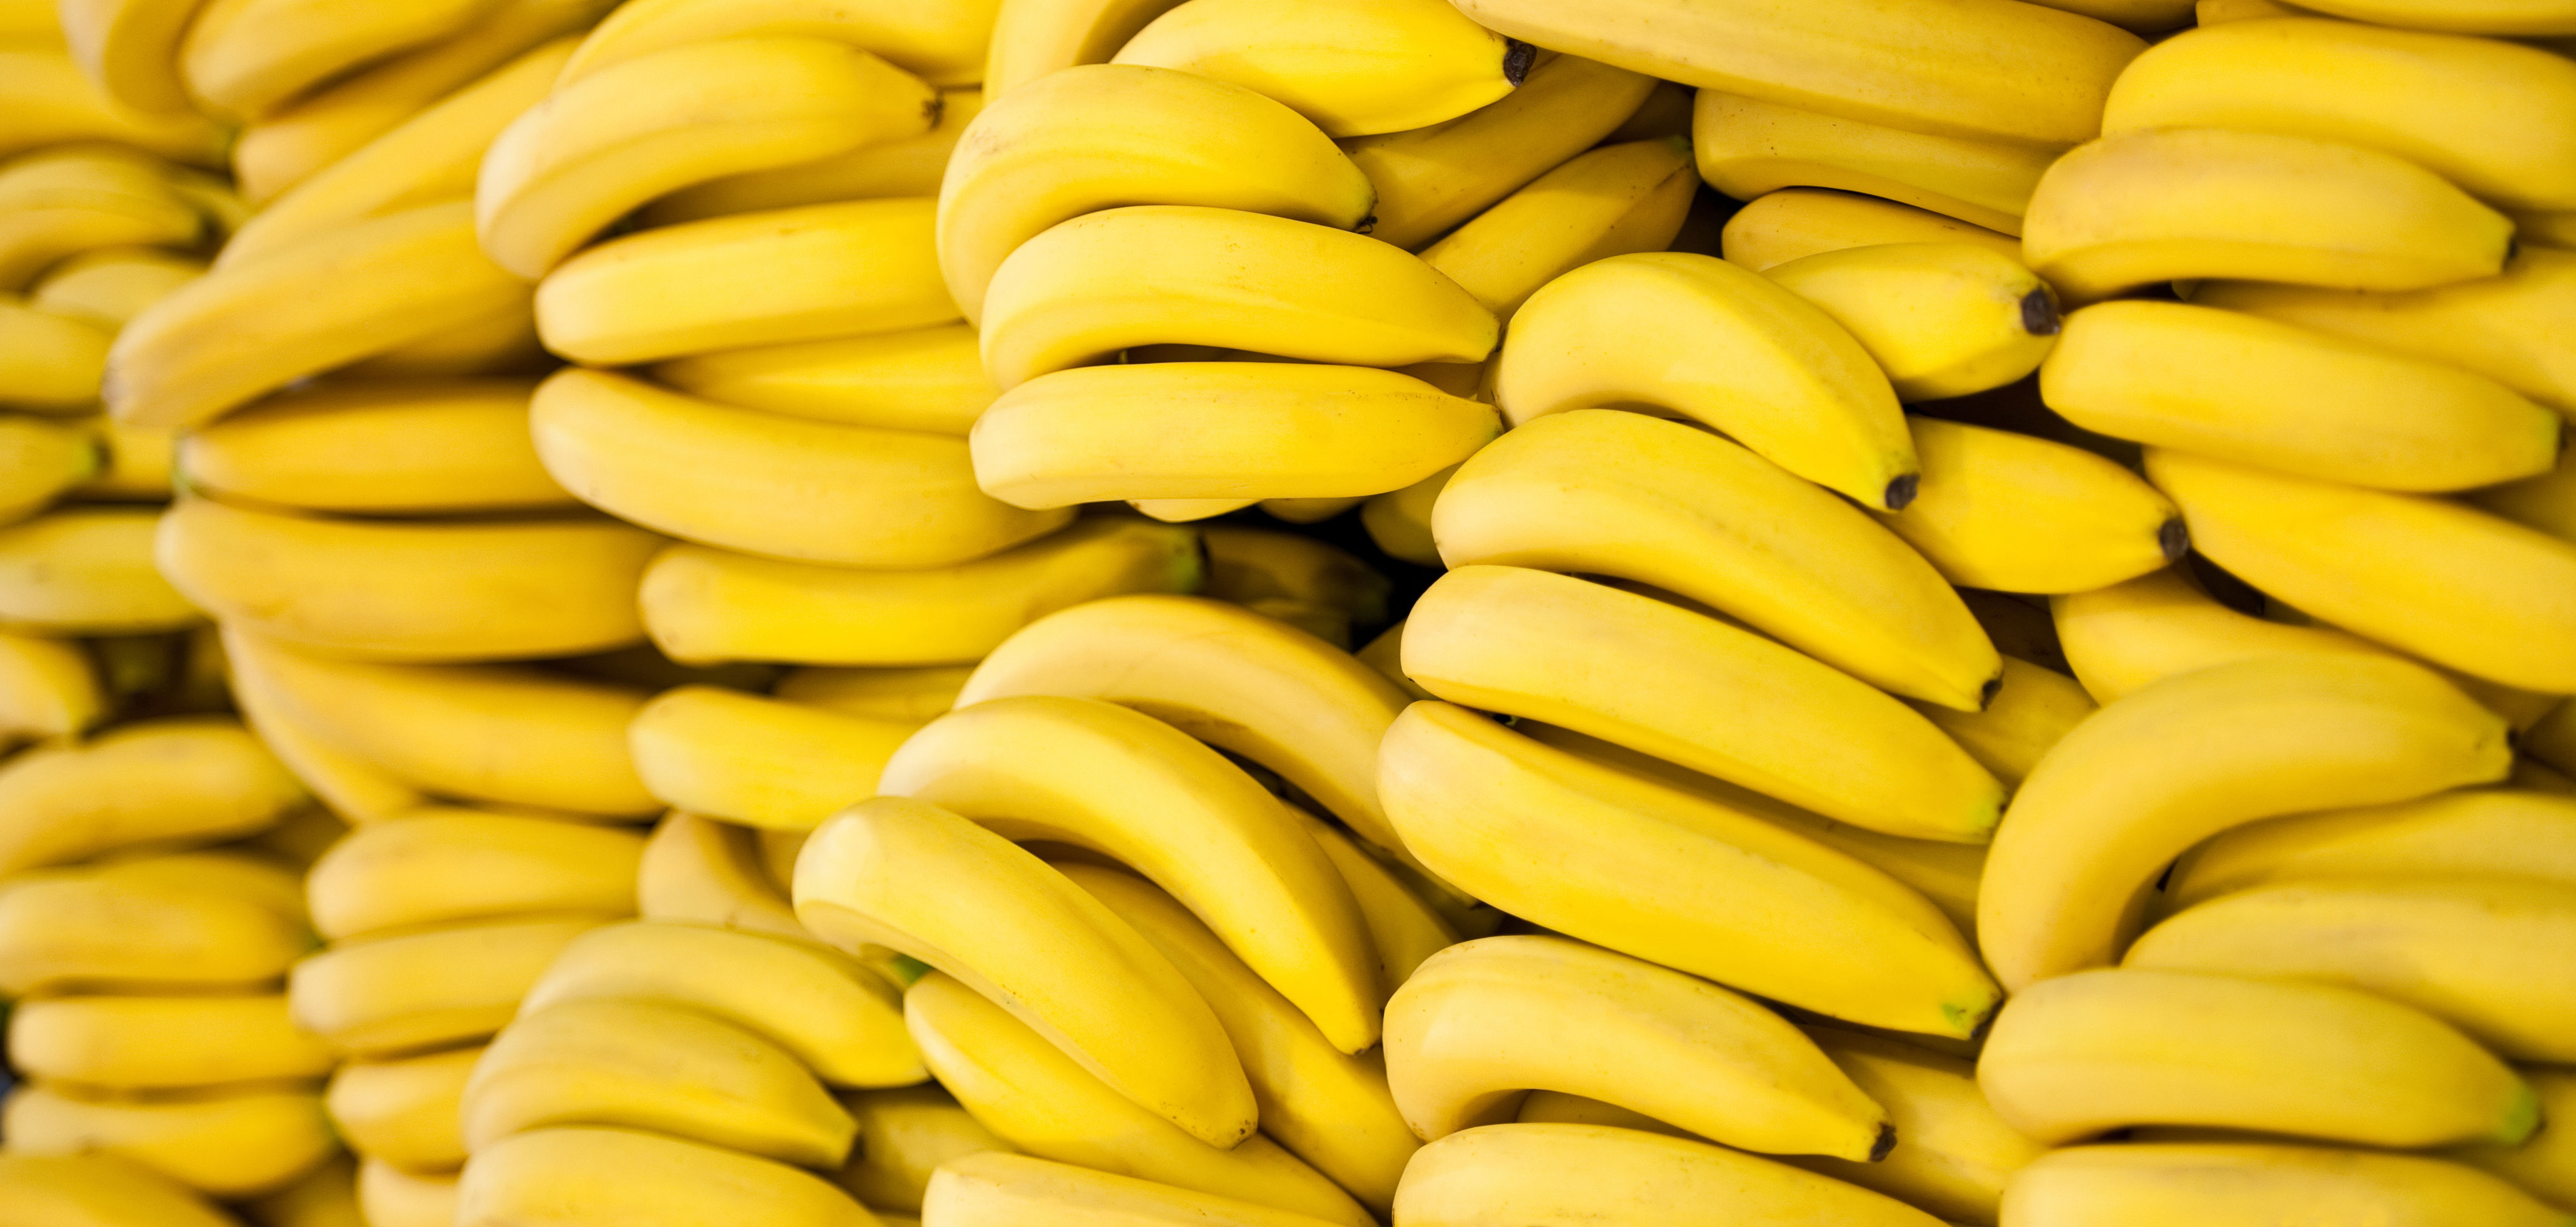 banana image